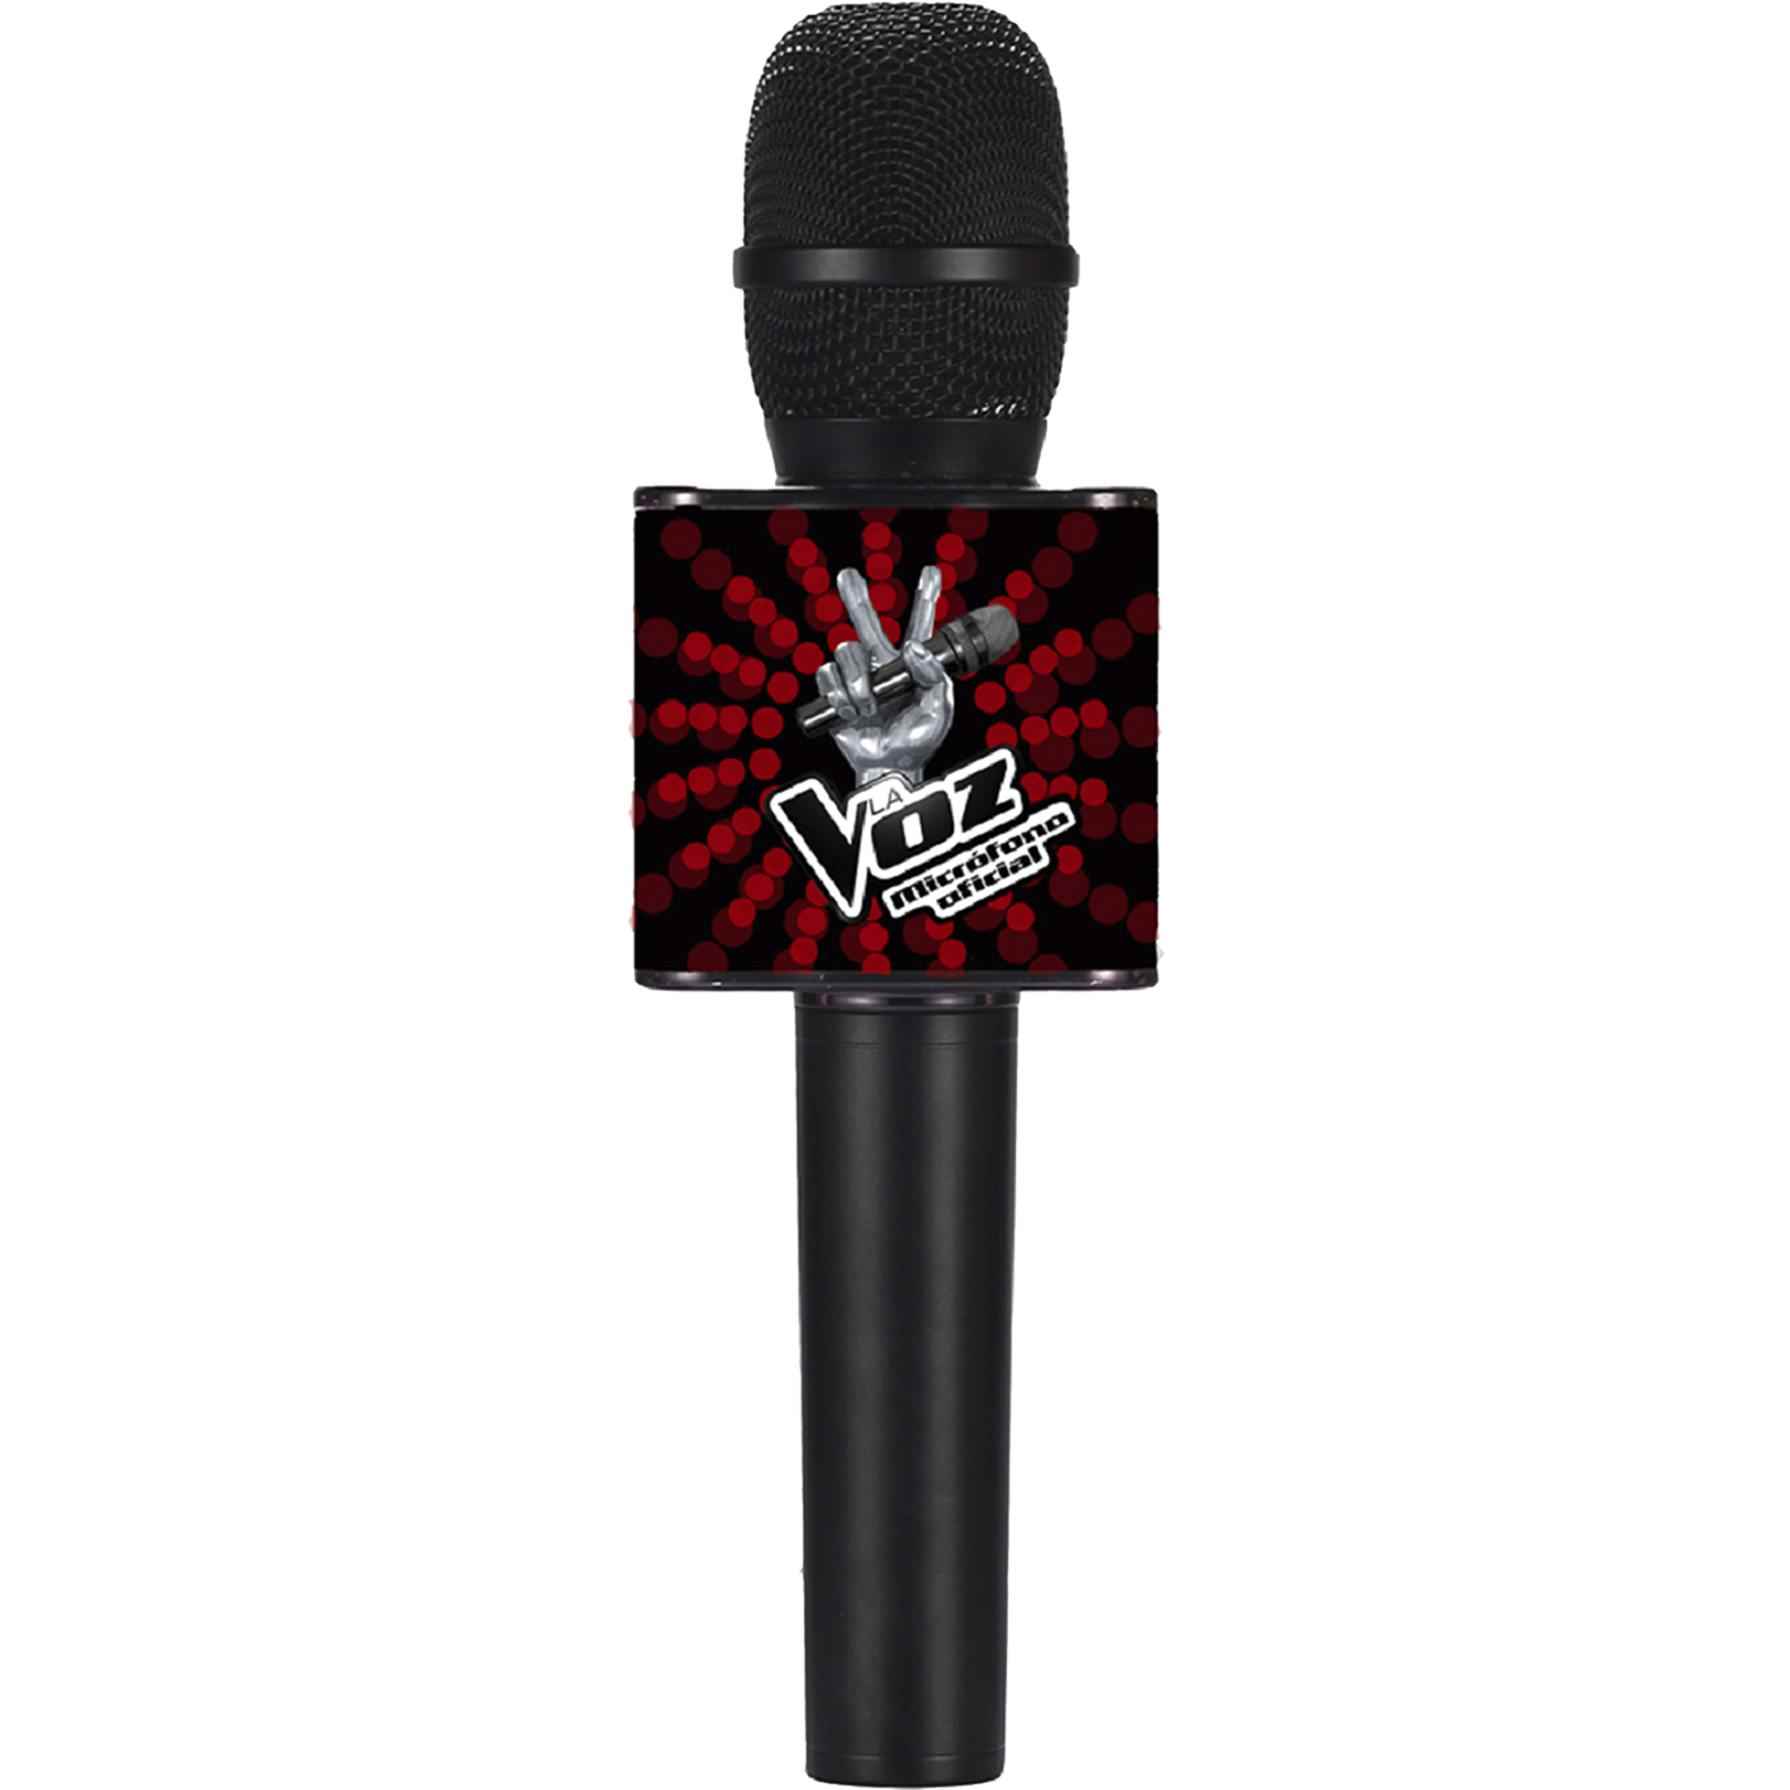 Micrófono karaoke Licencia Oficial la Voz negro 